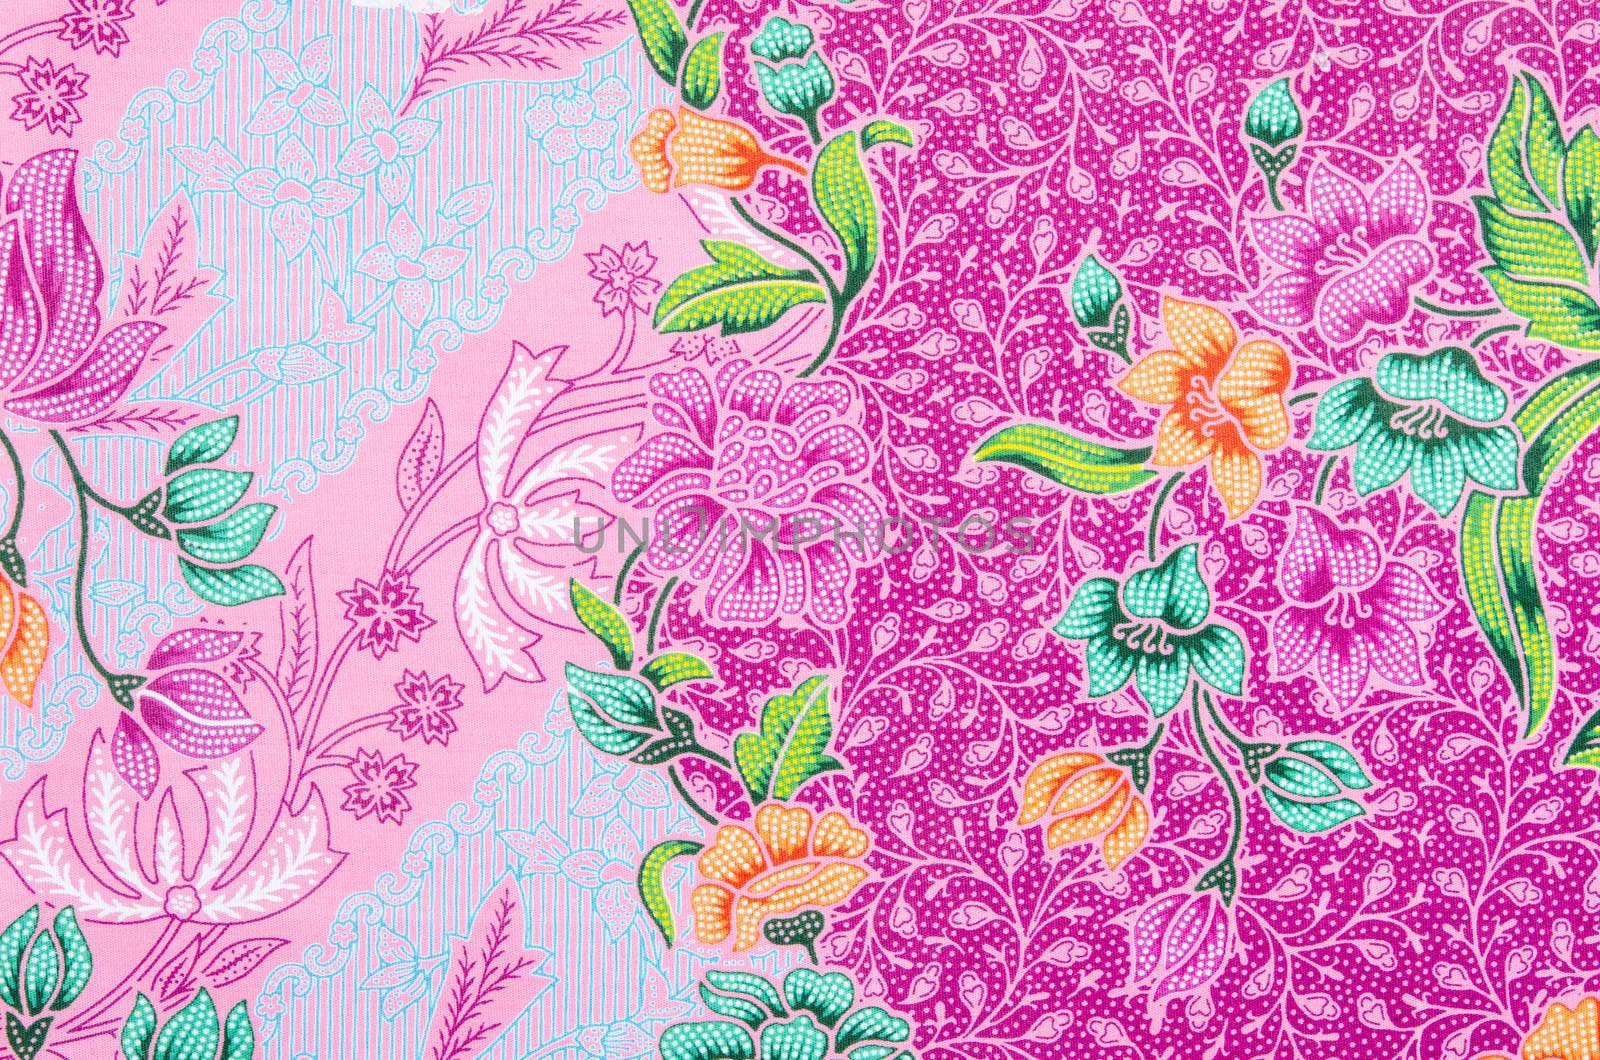 Fabric Batik pattern design in Thailand